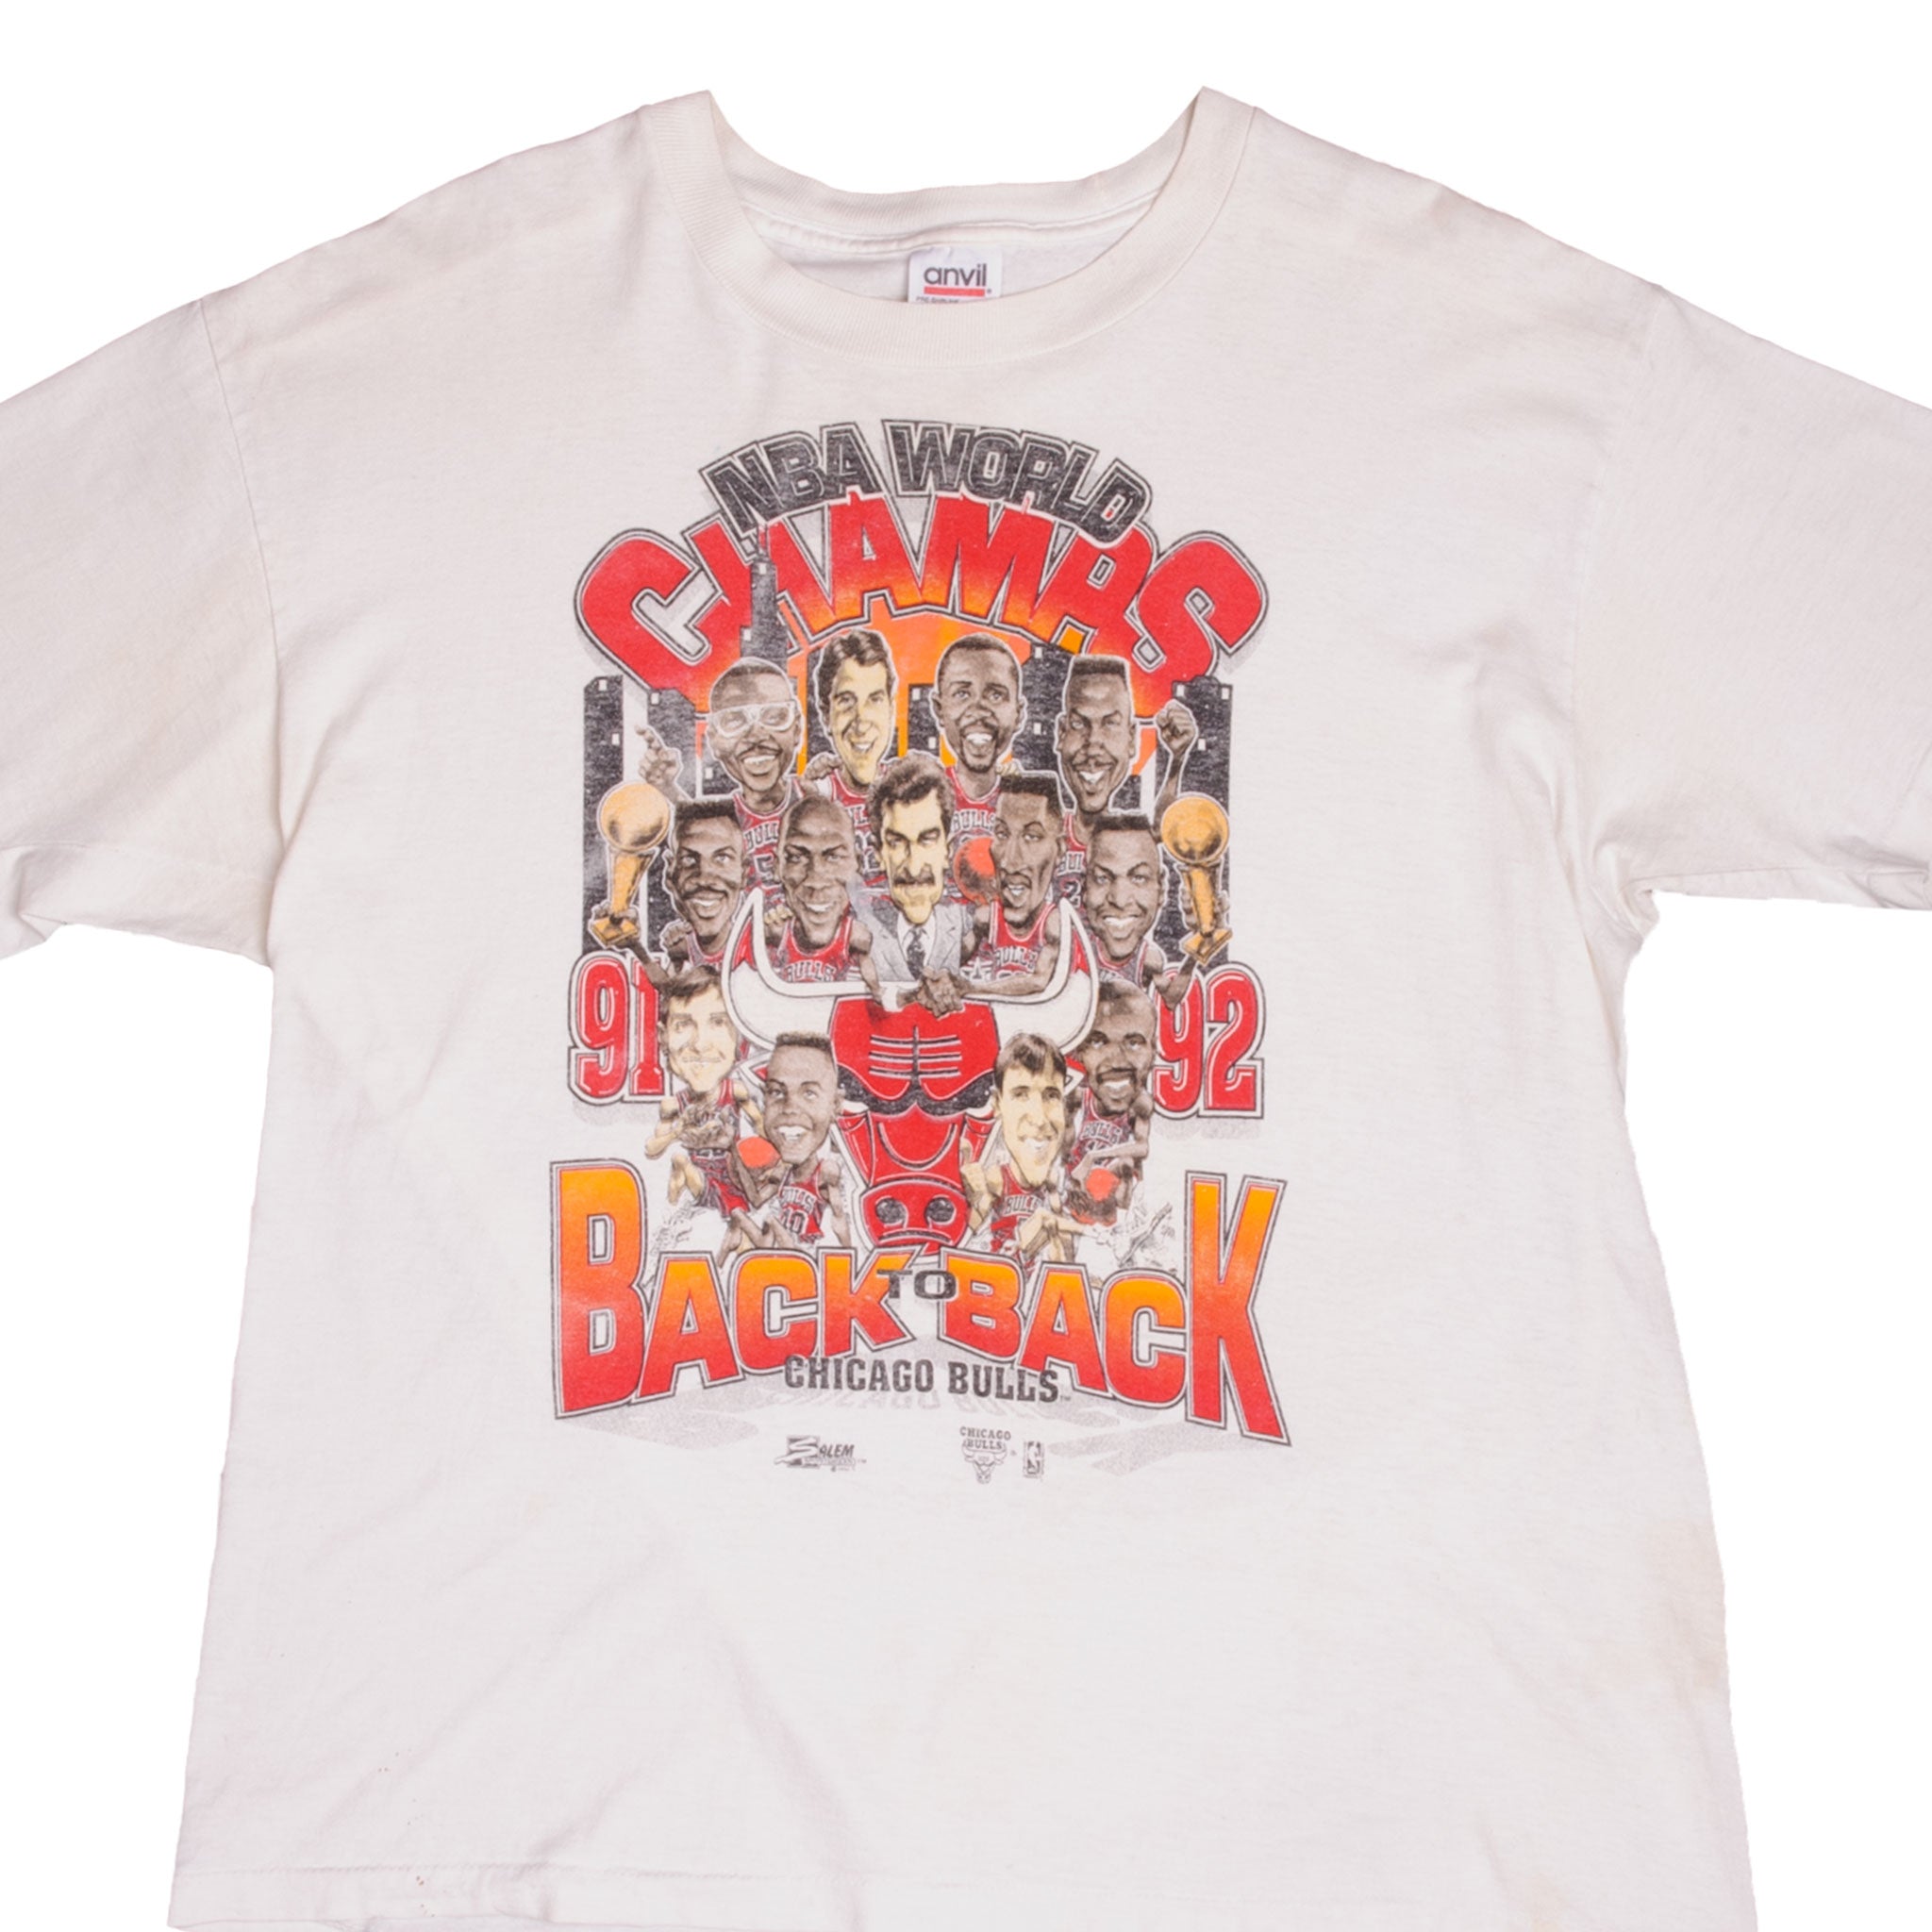 Vintage Starter NBA Chicago Bulls Champion Tee Shirt 1998 Size XL